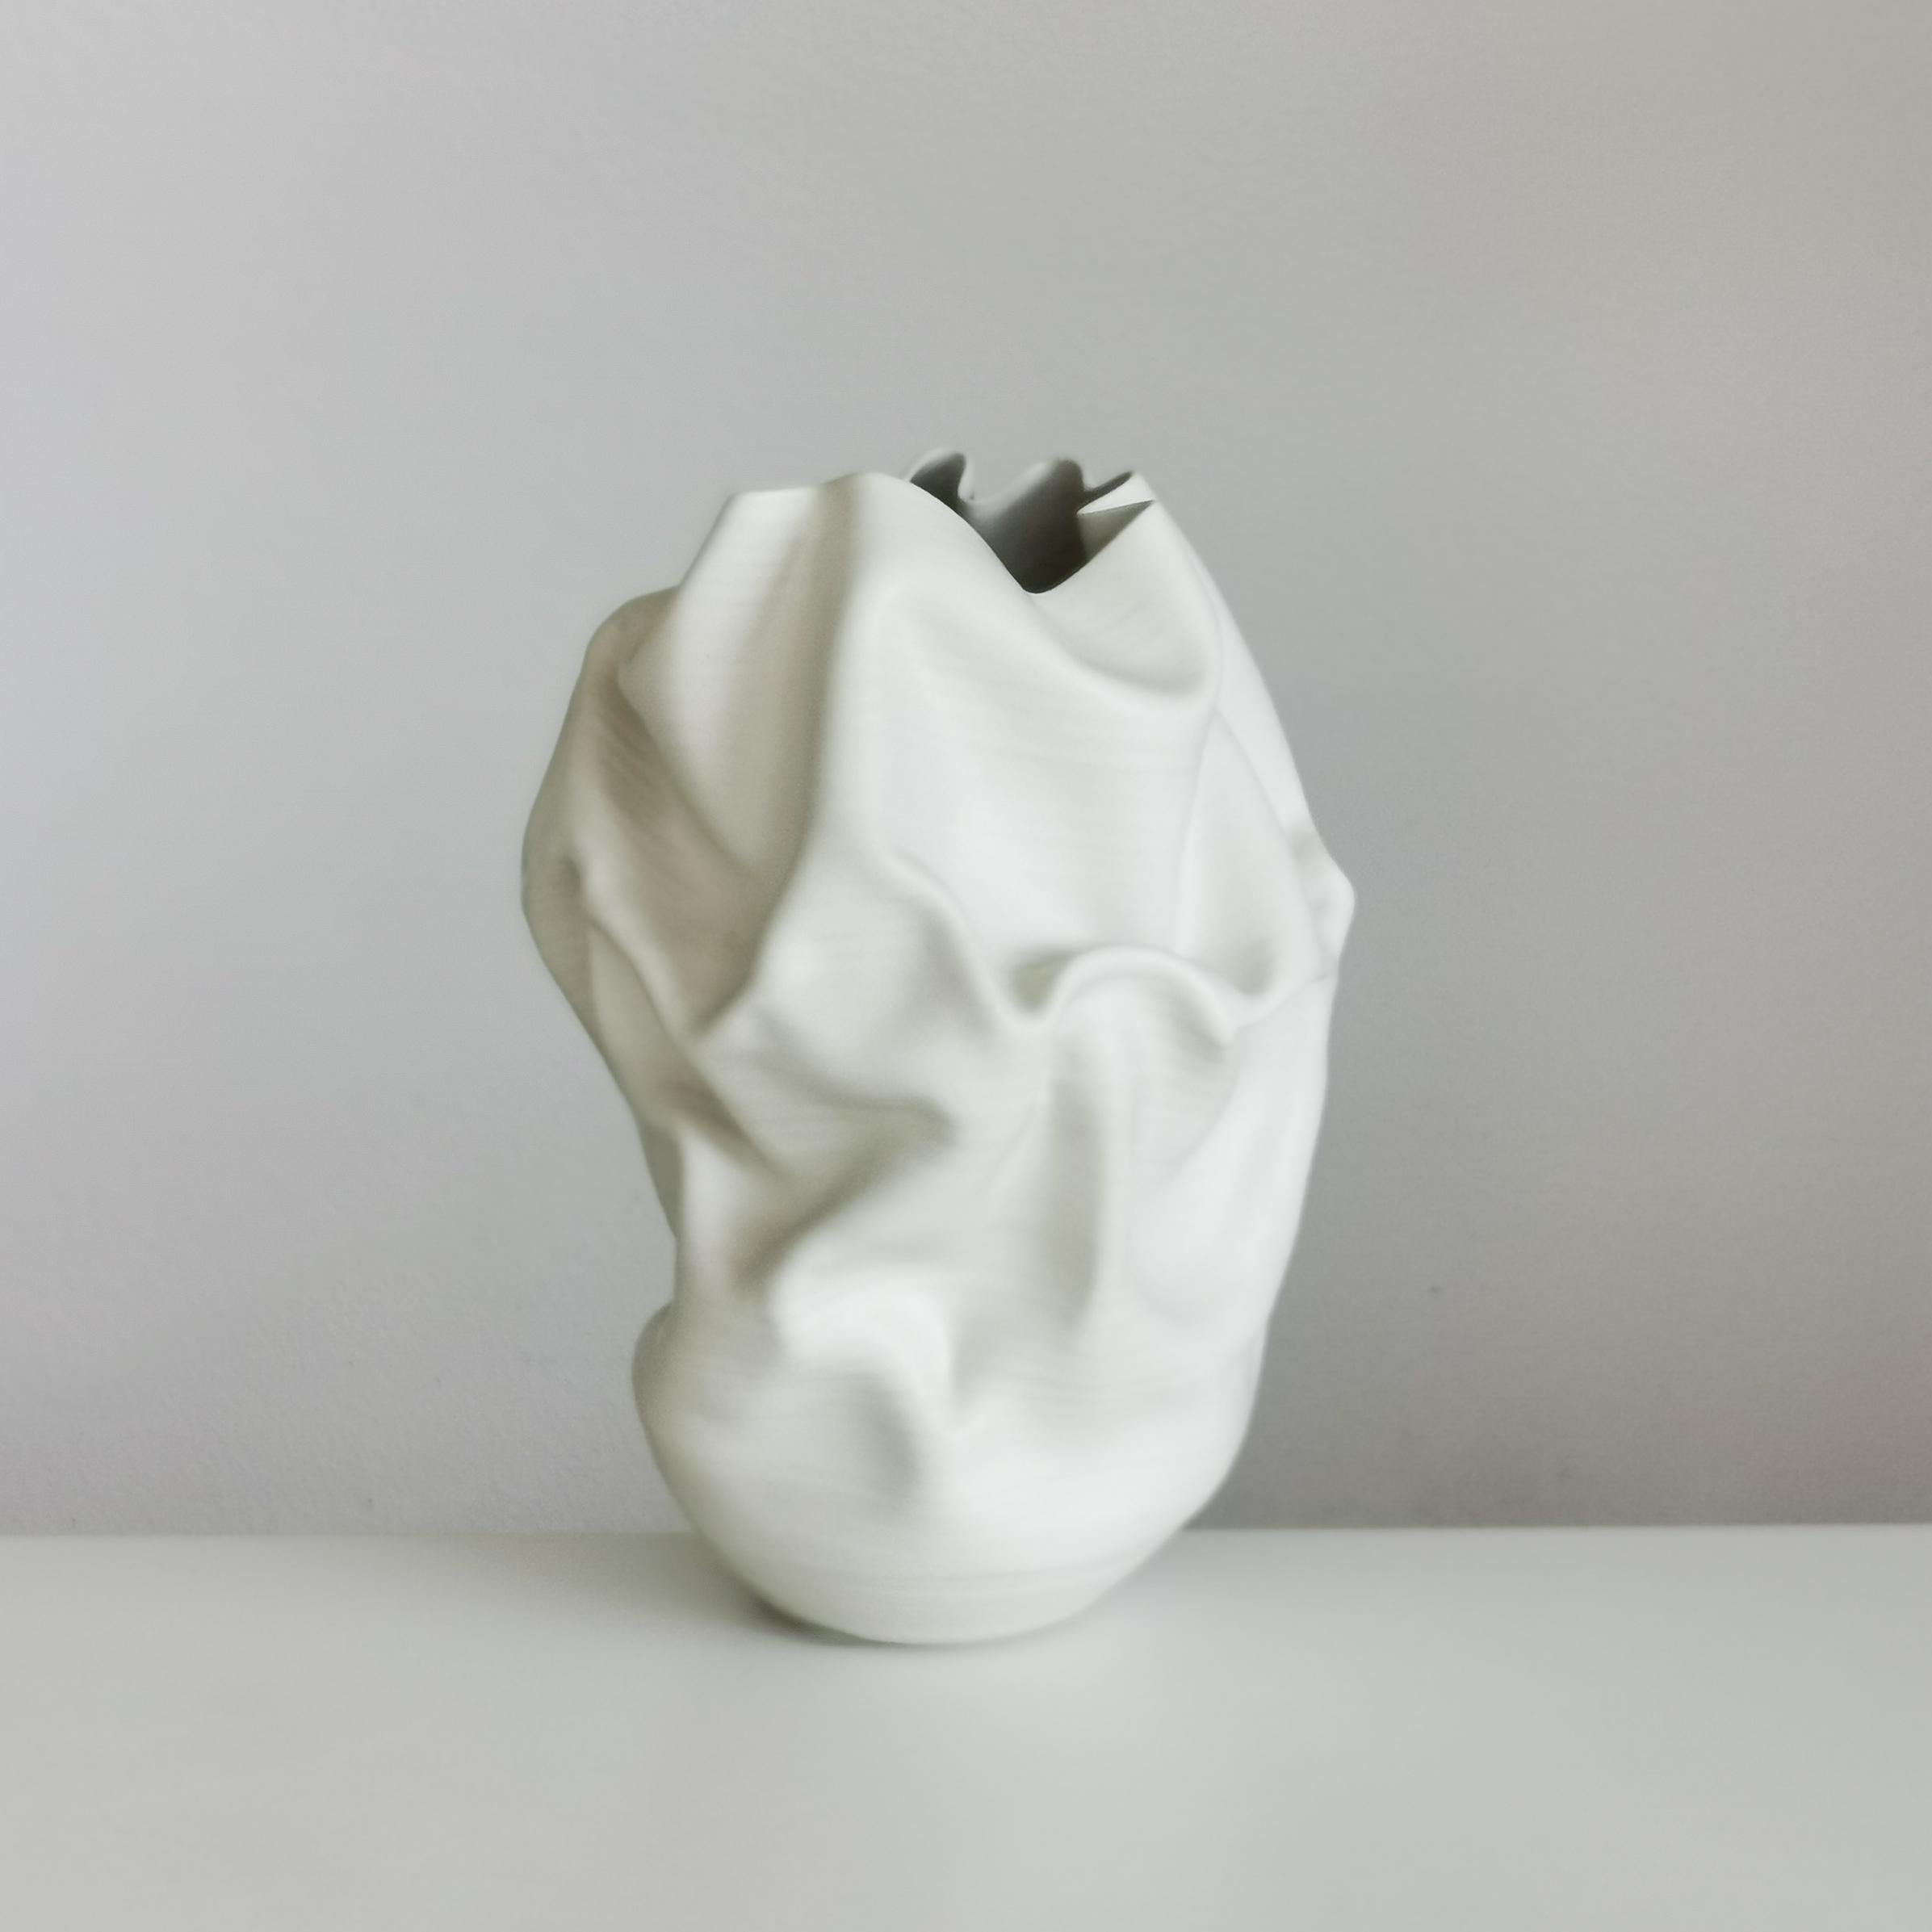 Other Medium Tall White Undulating Crumpled Form, Unique Ceramic Sculpture Vessel N.51